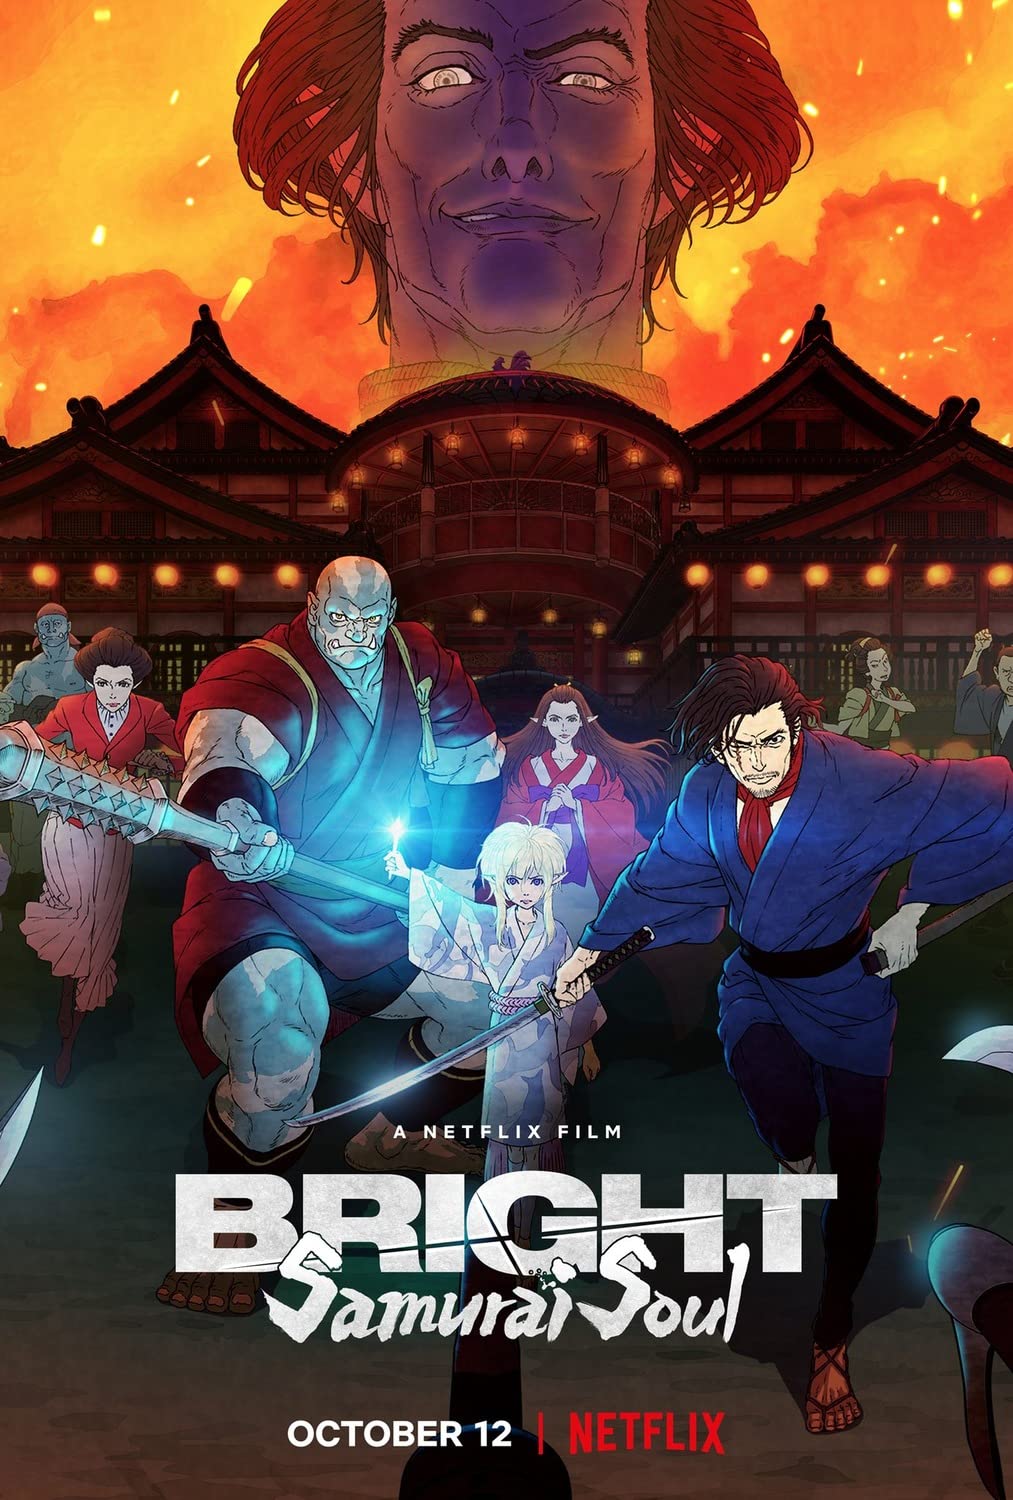 Bright Samurai Soul Trailer, Coming to Netflix in October 2021